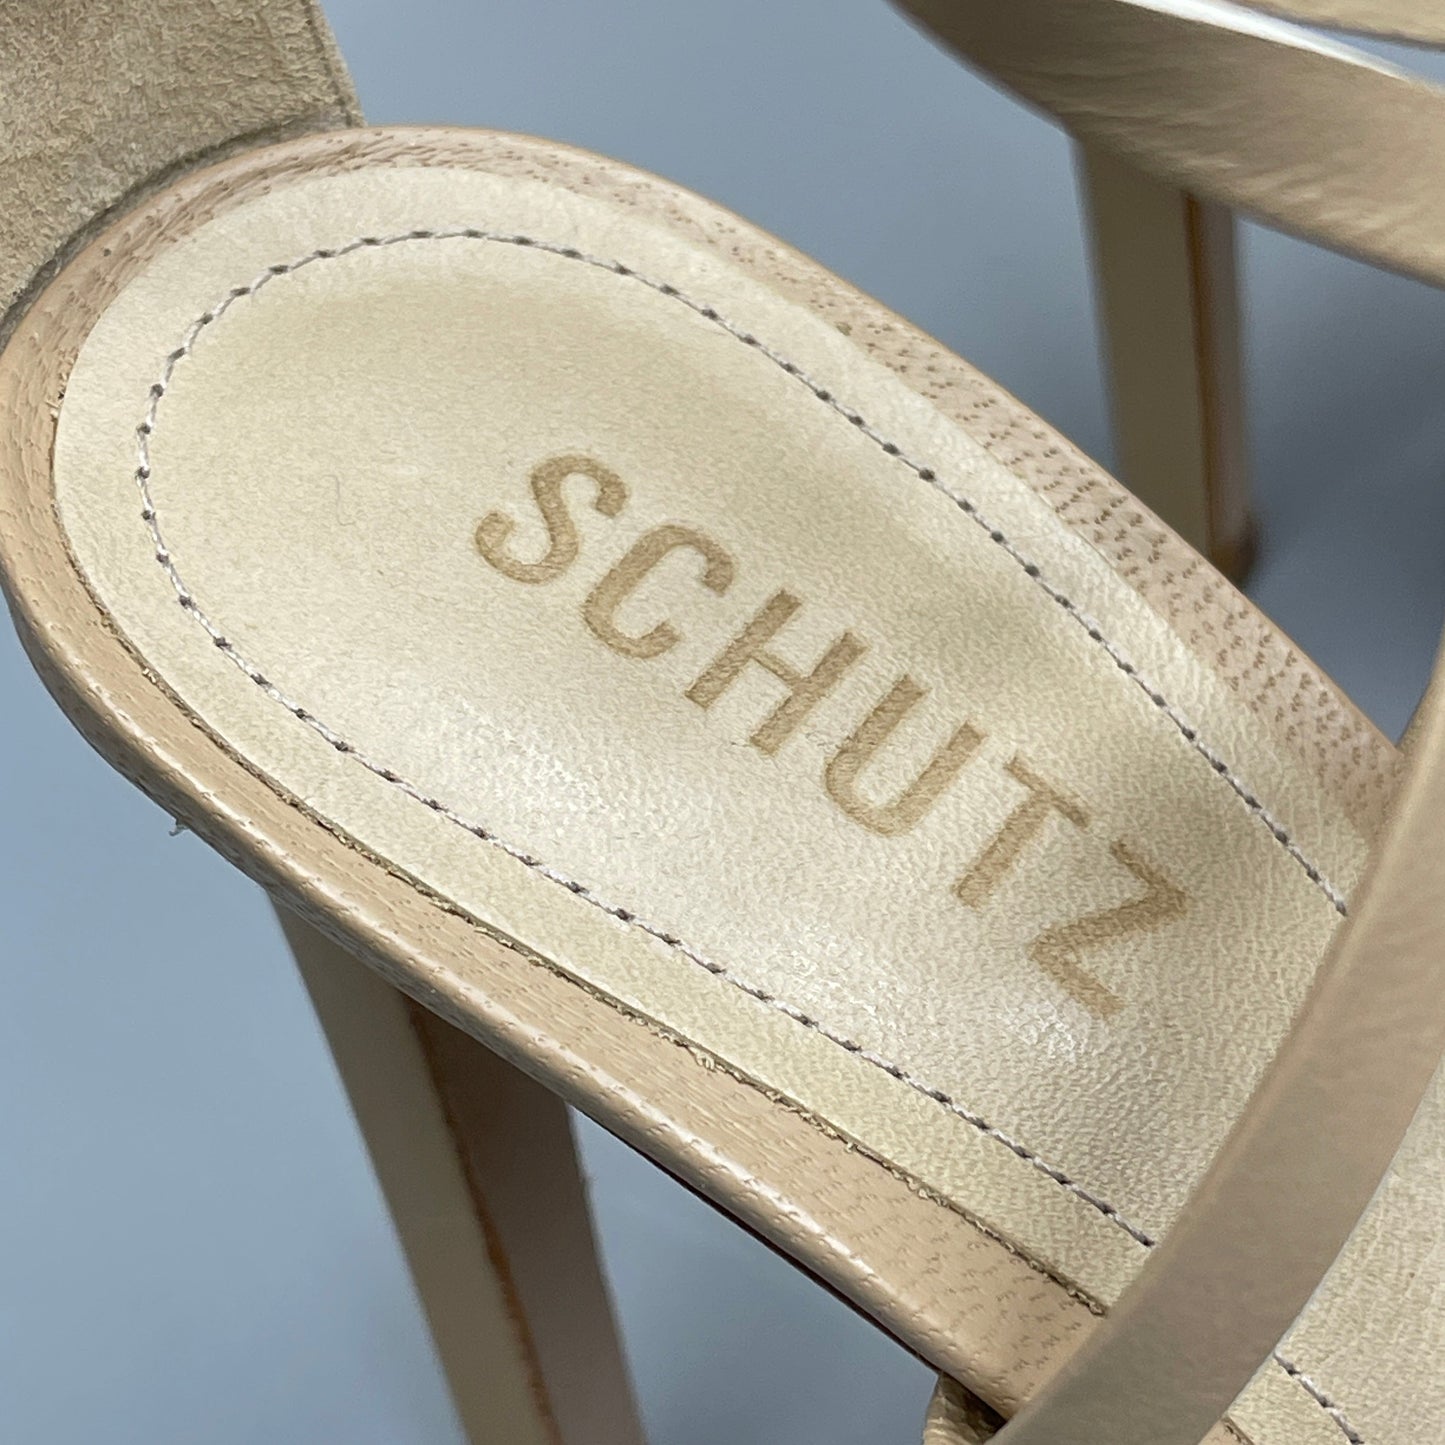 SCHUTZ Bryce Ankle Tie Women's Leather High Heel Sandal Light Nude Sz 5.5B (New)